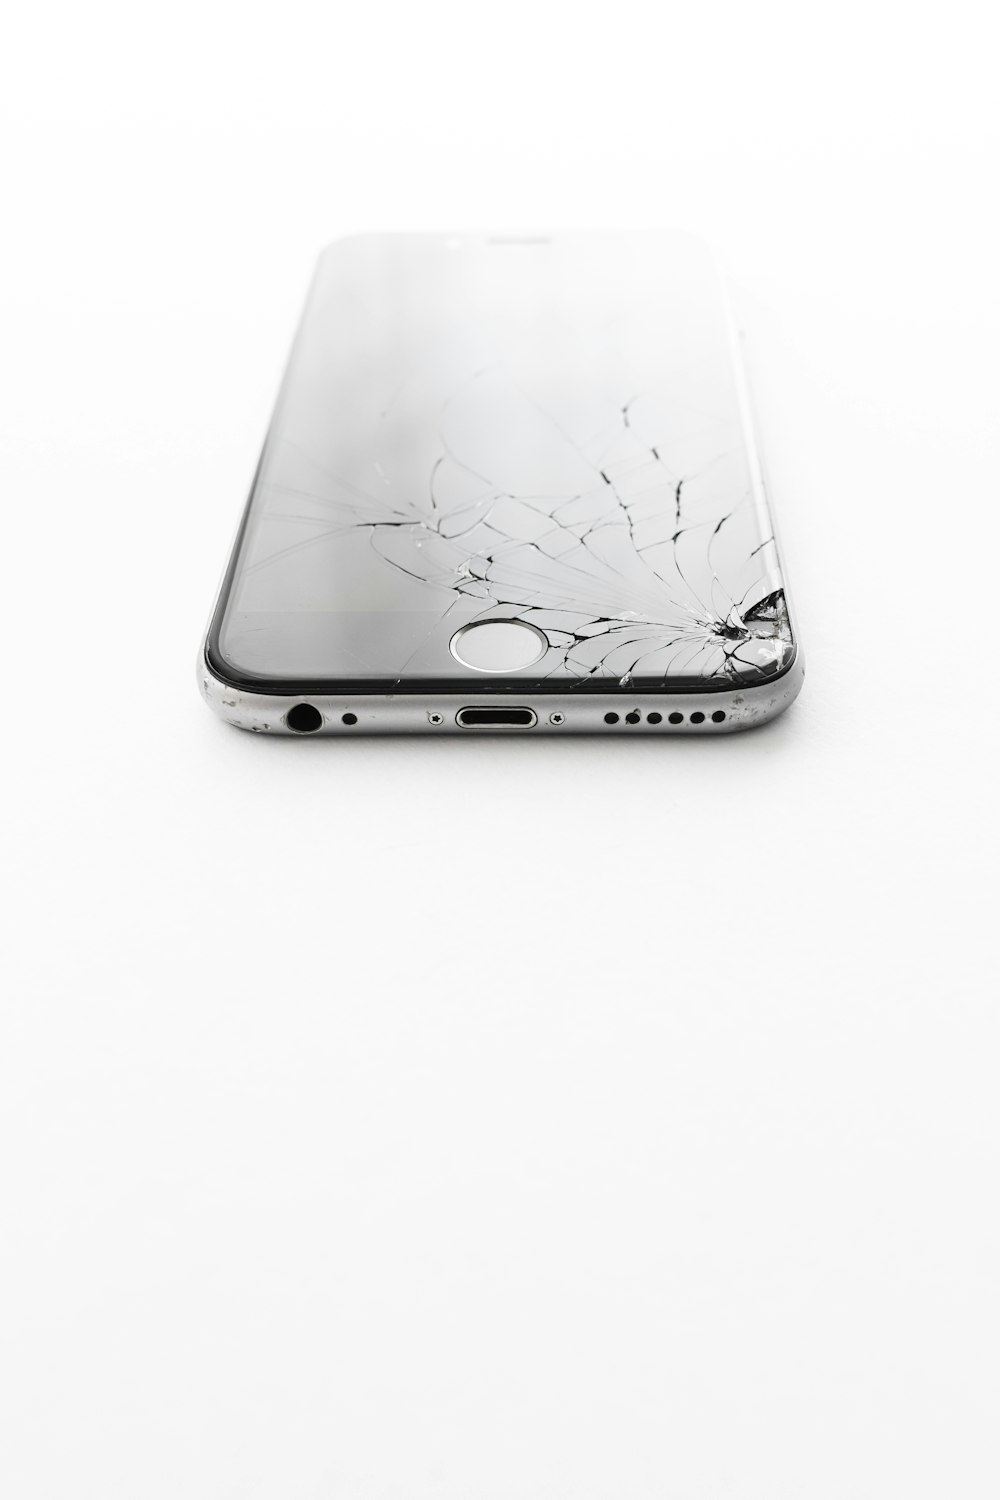 1000+ Broken Phone Pictures | Download Free Images on Unsplash